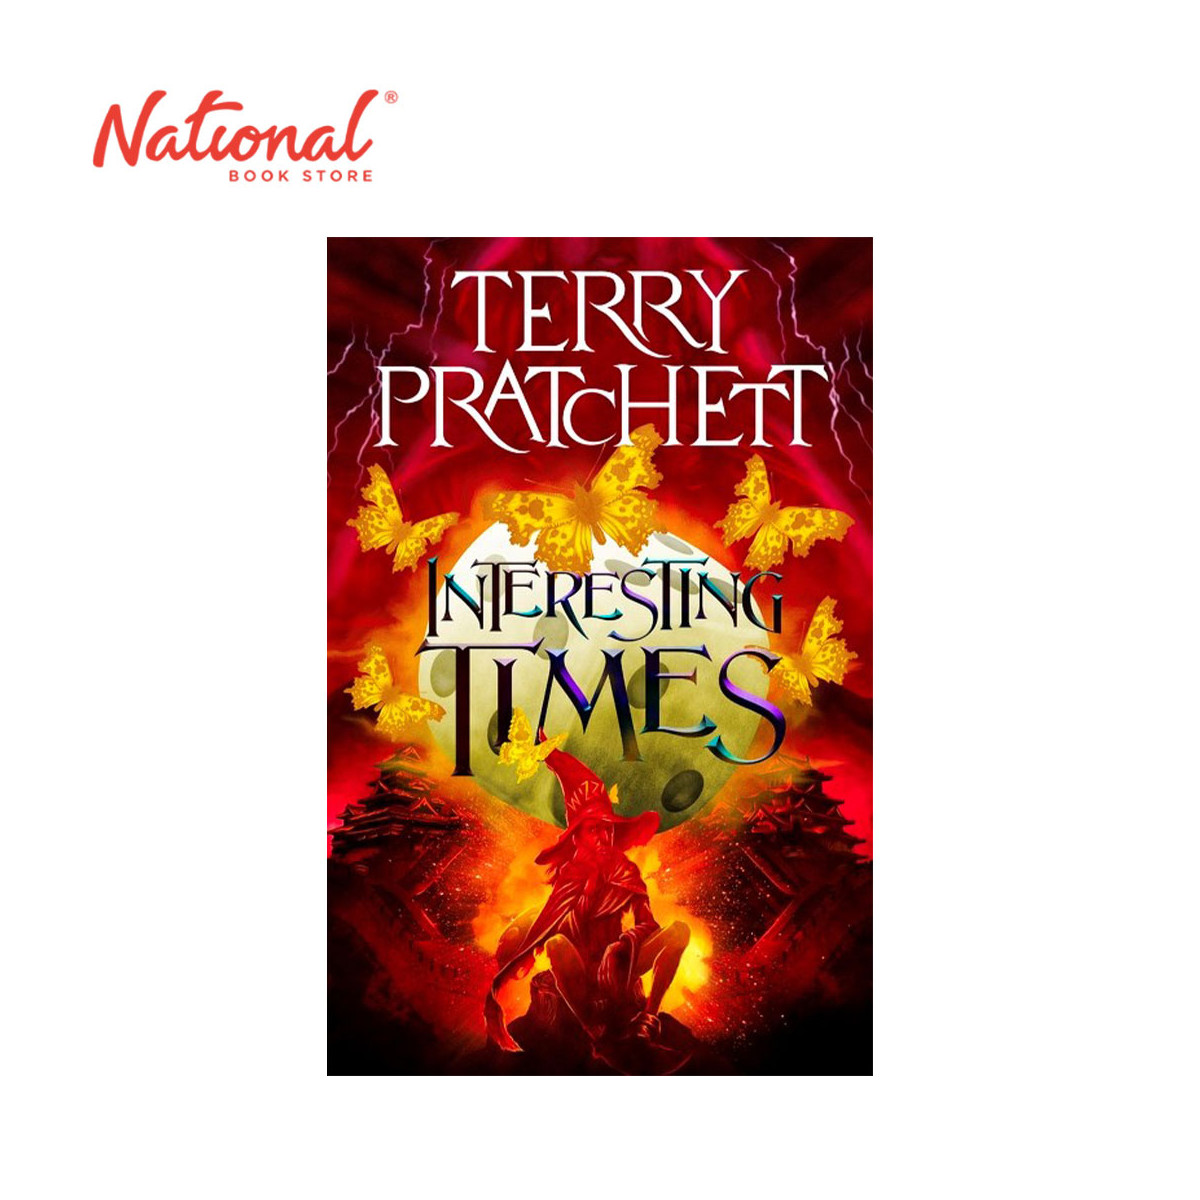 *PRE-ORDER* Interesting Times by Terry Pratchett - Trade Paperback - Sci-Fi, Fantasy & Horror